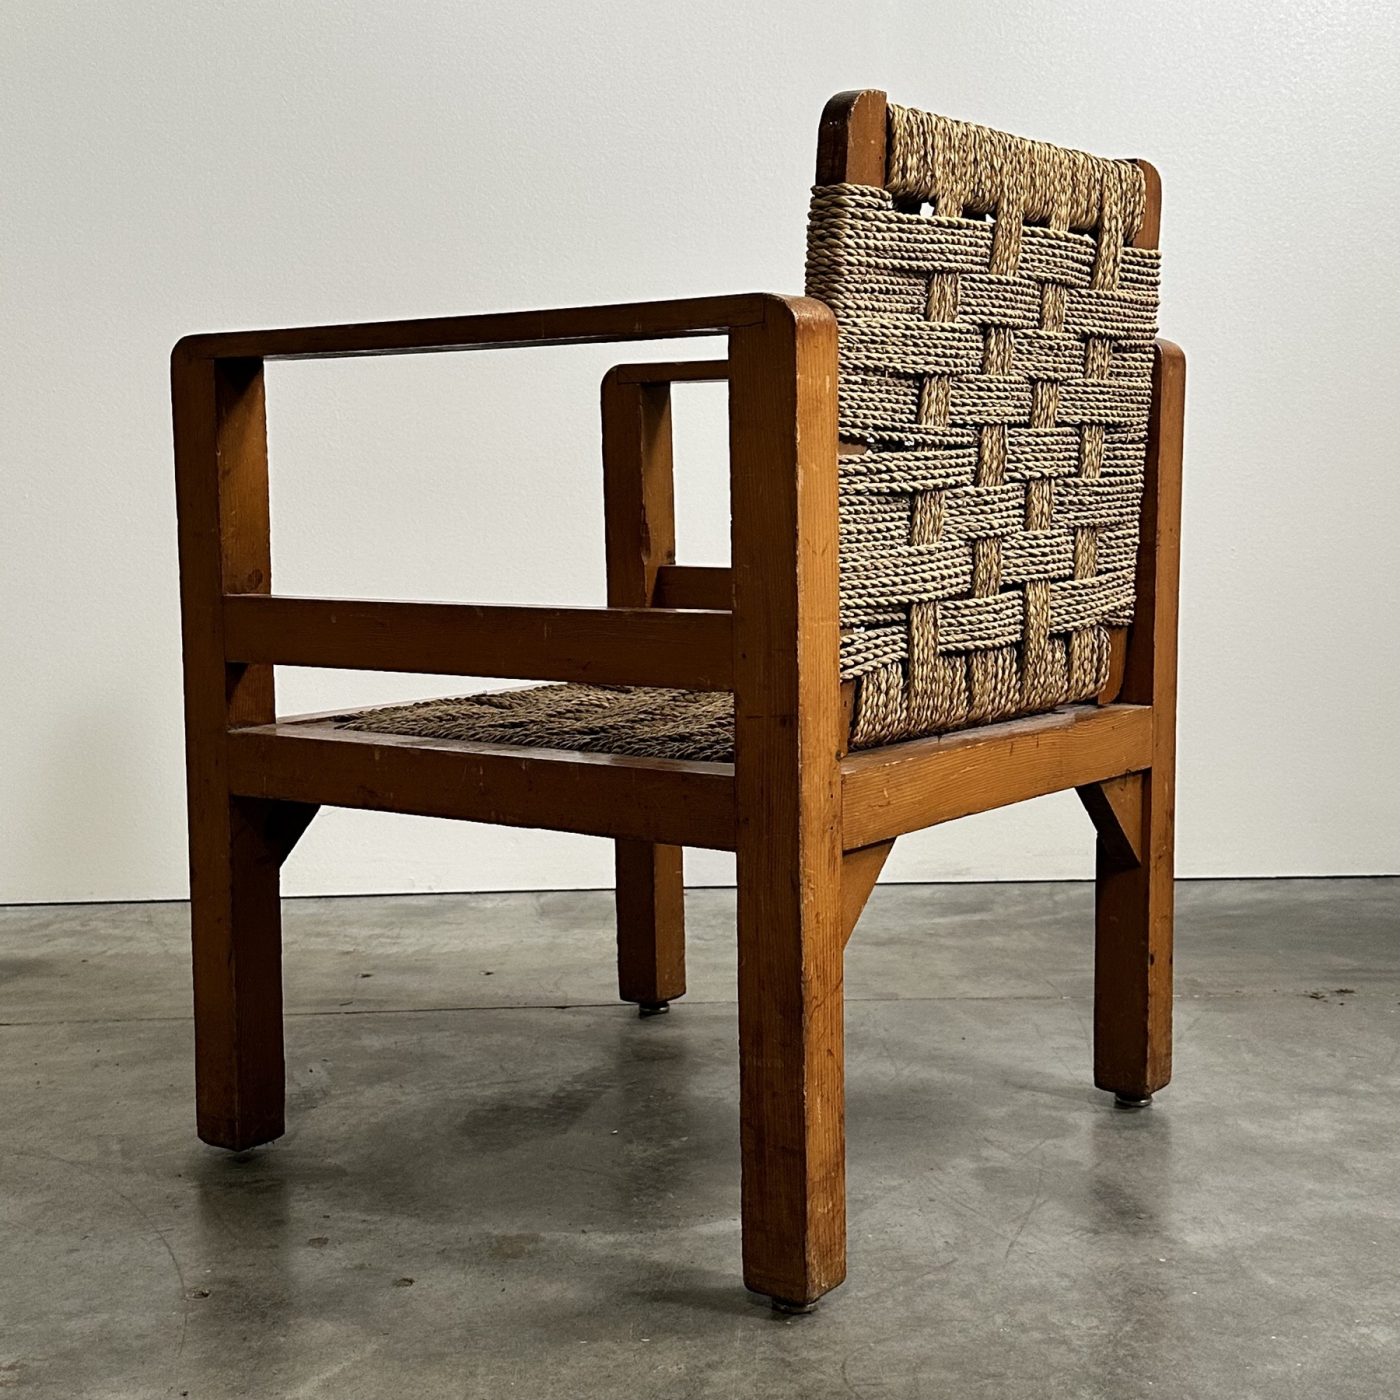 objet-vagabond-rope-armchairs0001